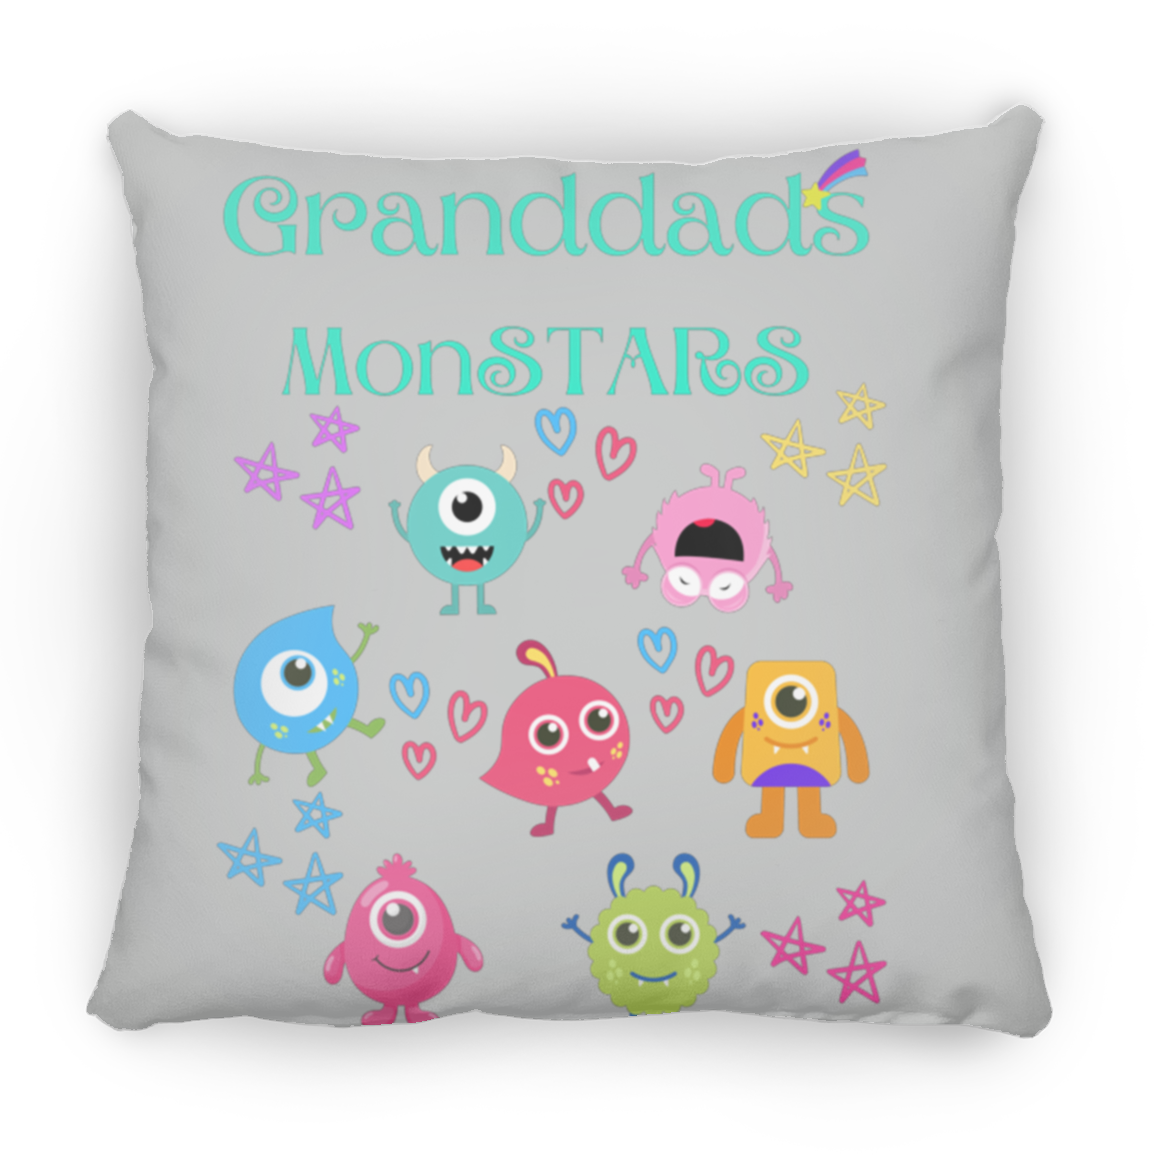 Granddads MonSTARS Small Square Pillow